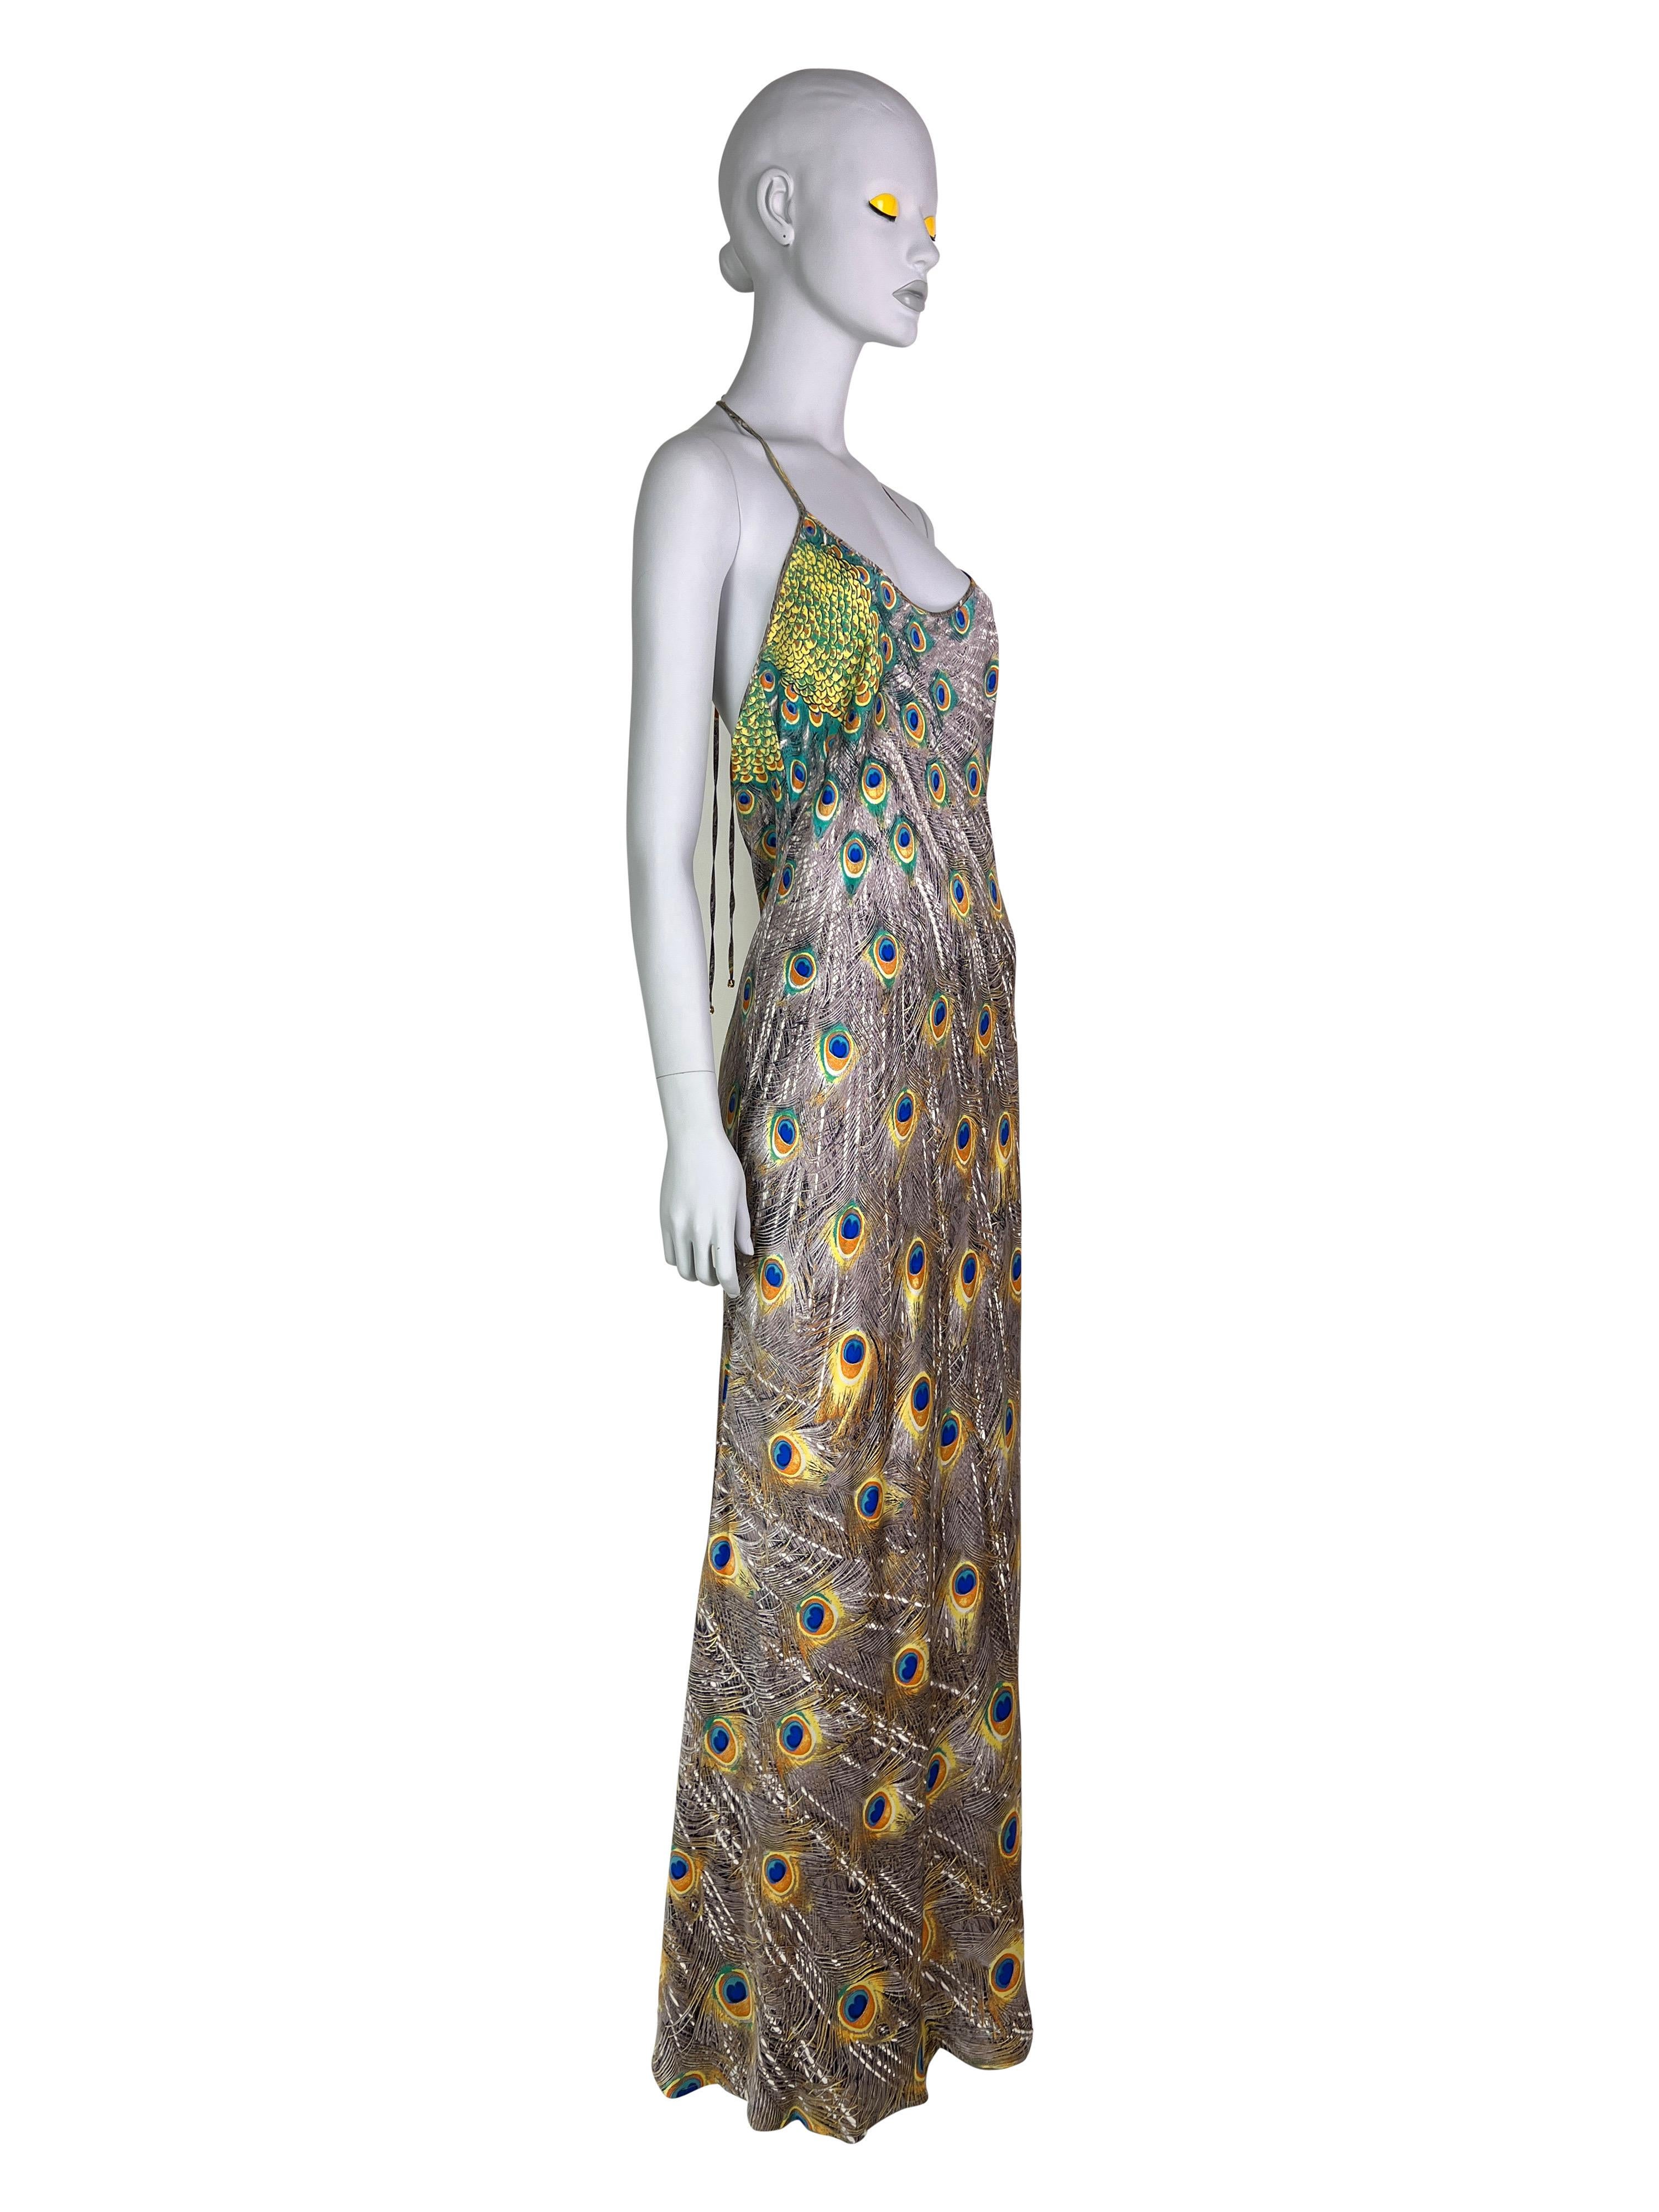 Roberto Cavalli Fall 1999 Peacock Print Bias Cut Silk Gown  For Sale 3